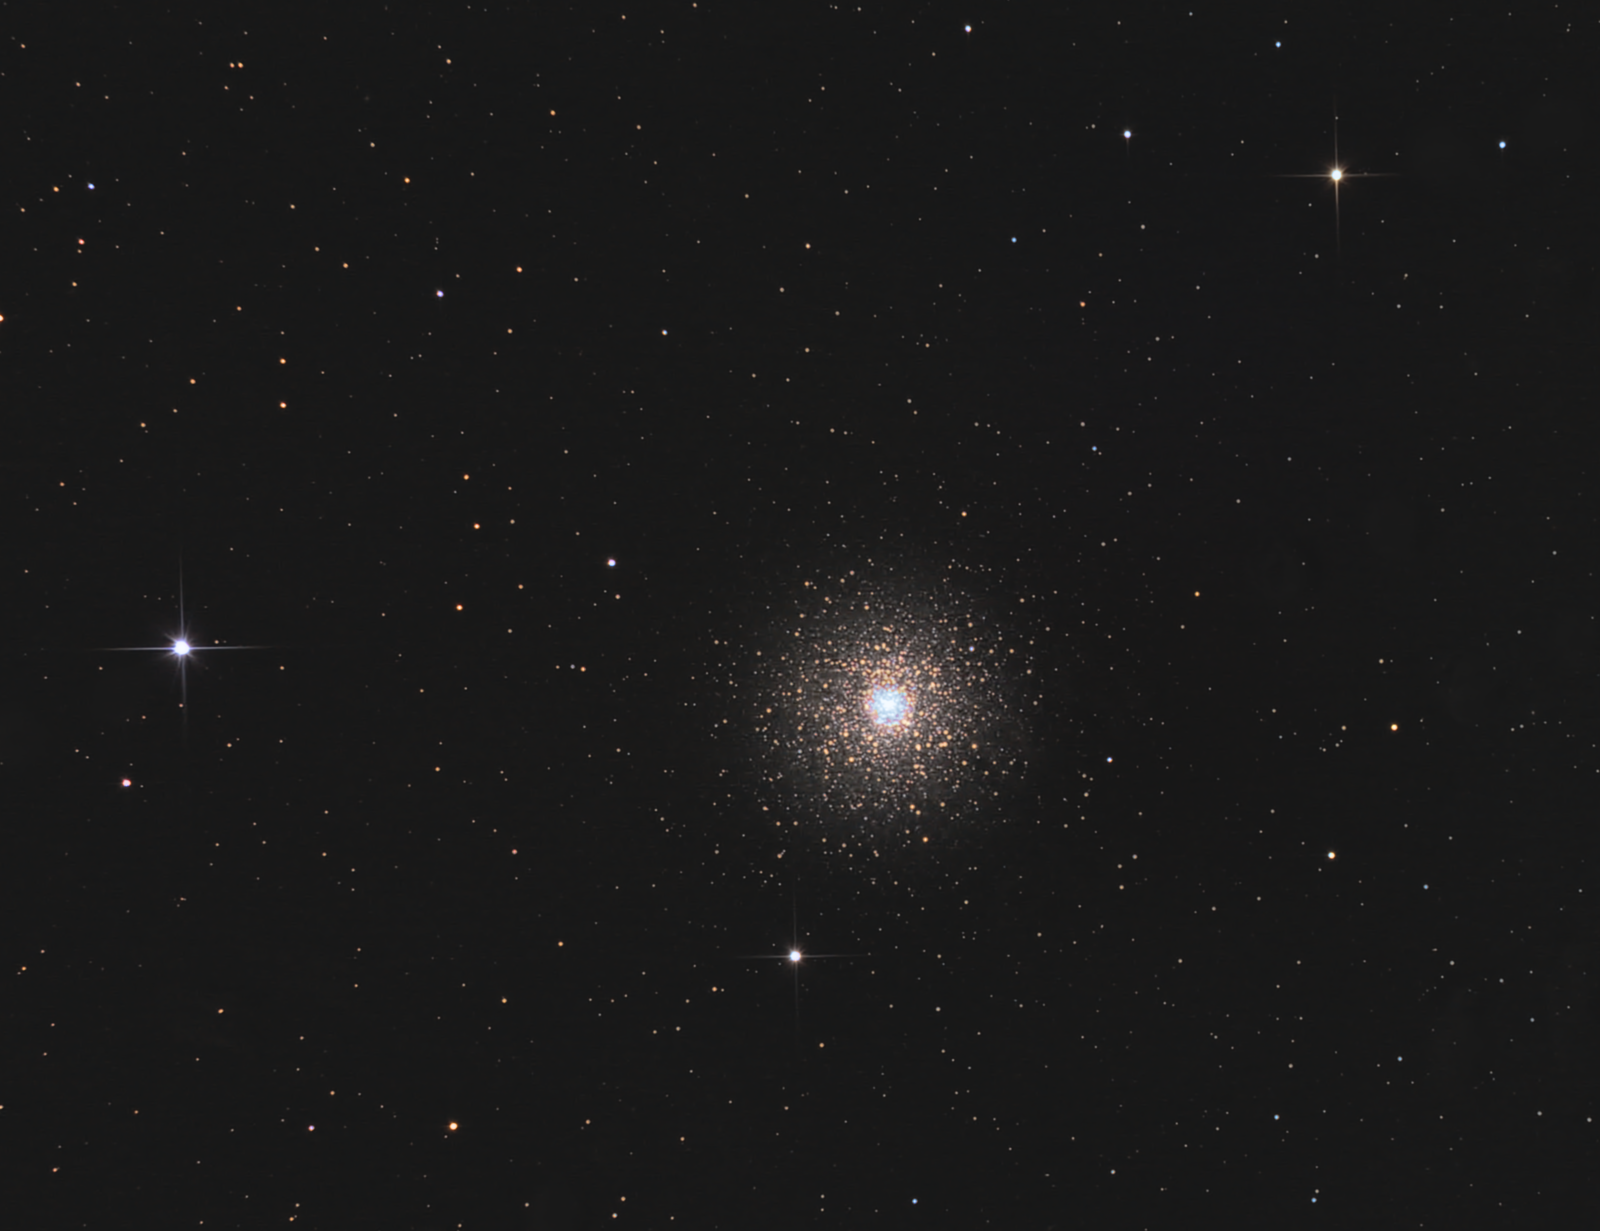 Imaging Challenge #18 - Globular Clusters